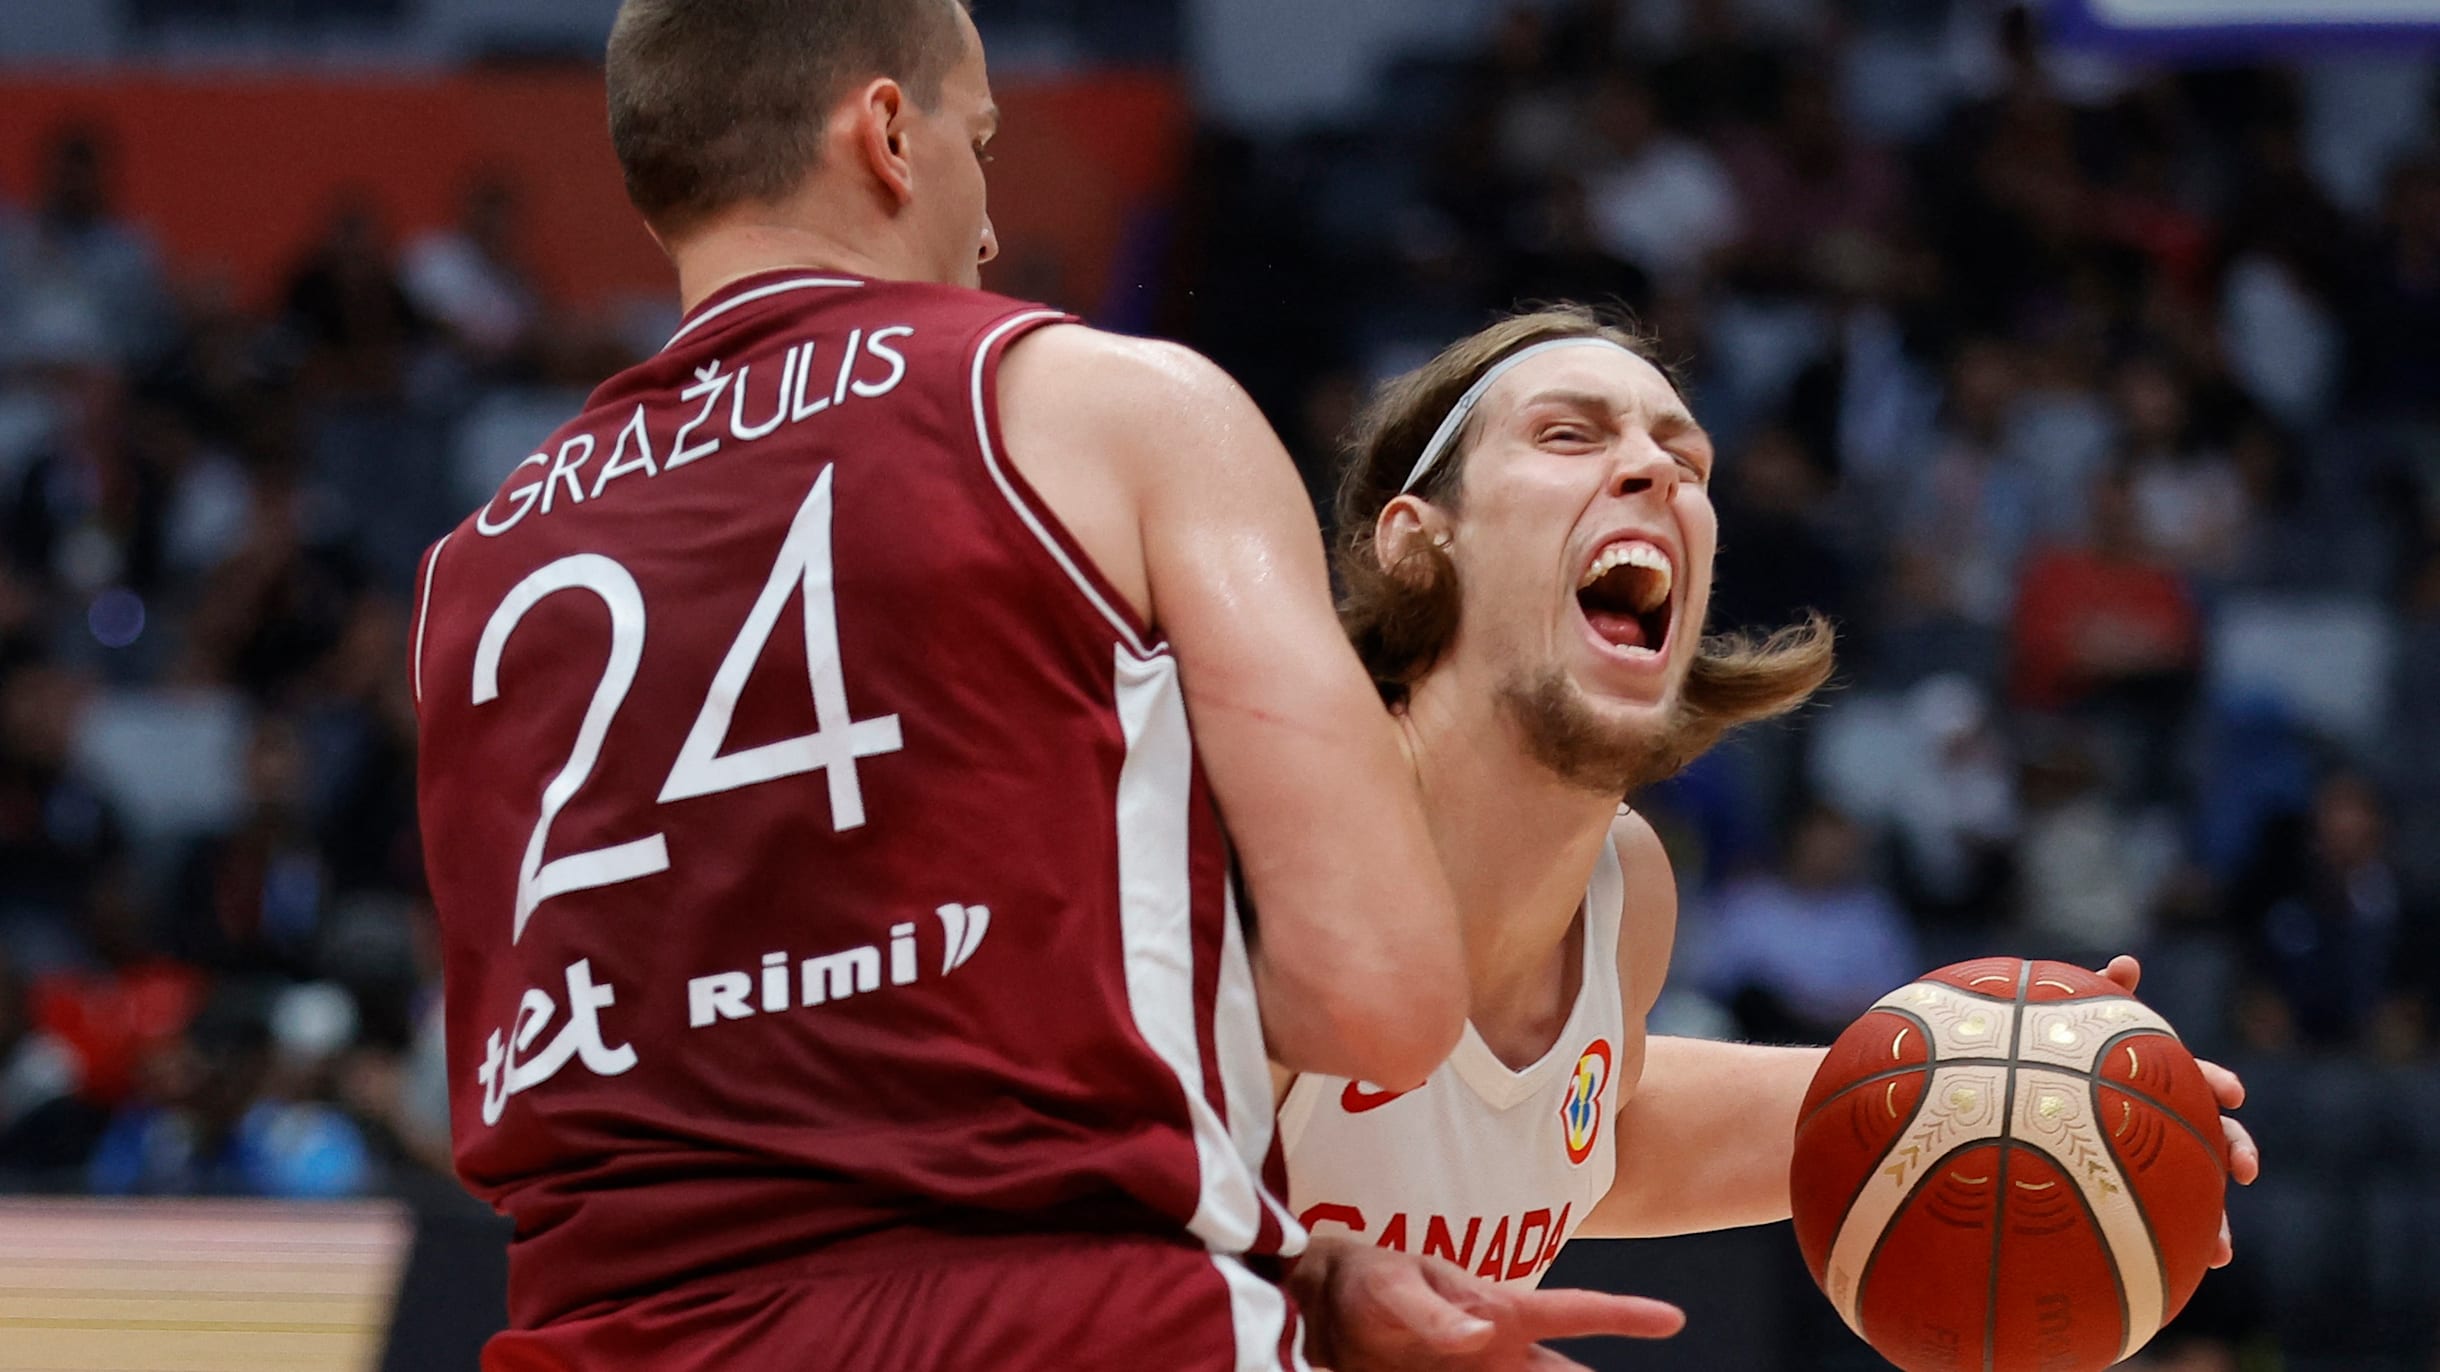 Canada weather early Latvian storm to stay unbeaten - FIBA